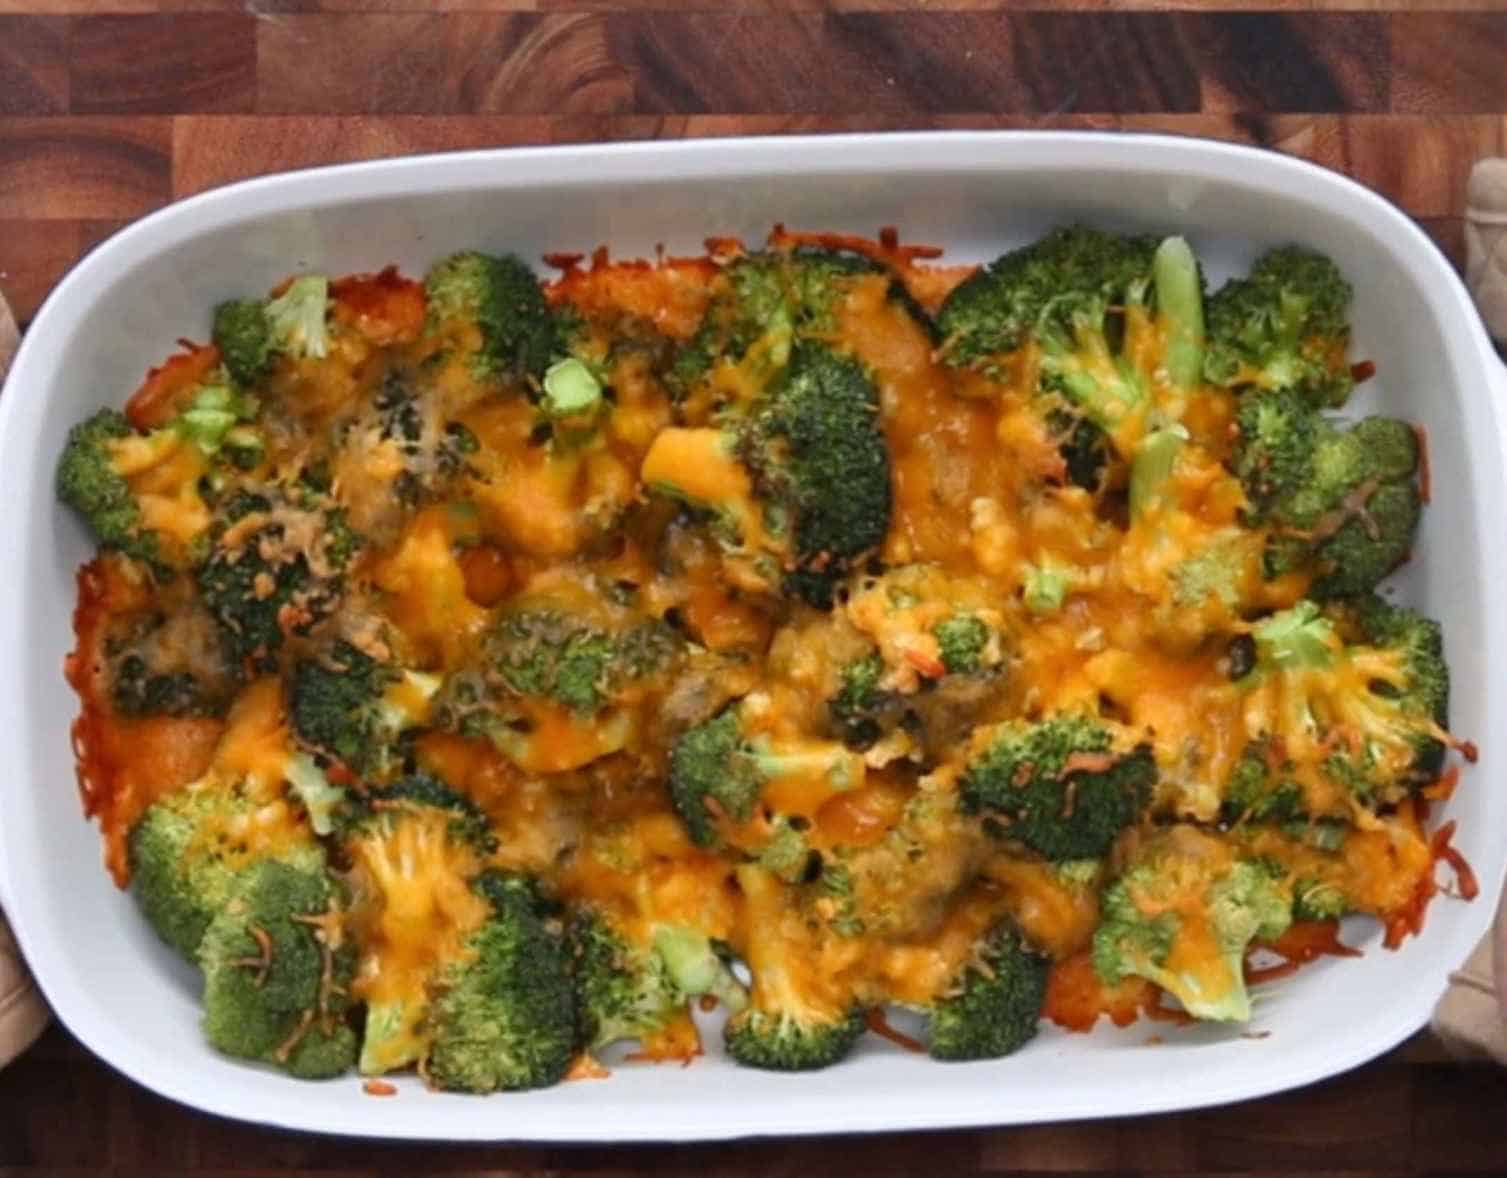 Cheesy garlic broccoli